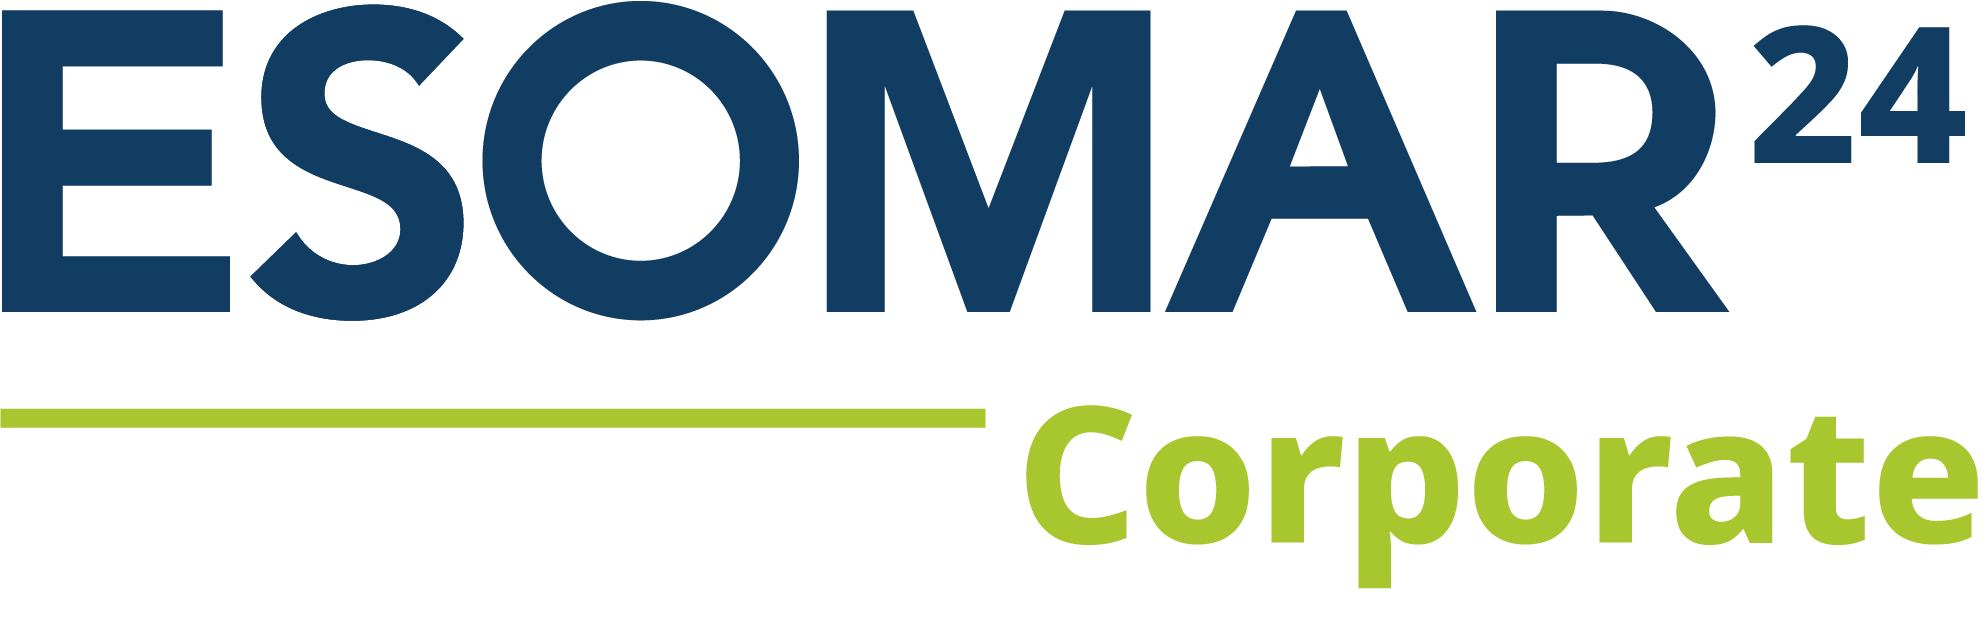 Corporate Membership Logo